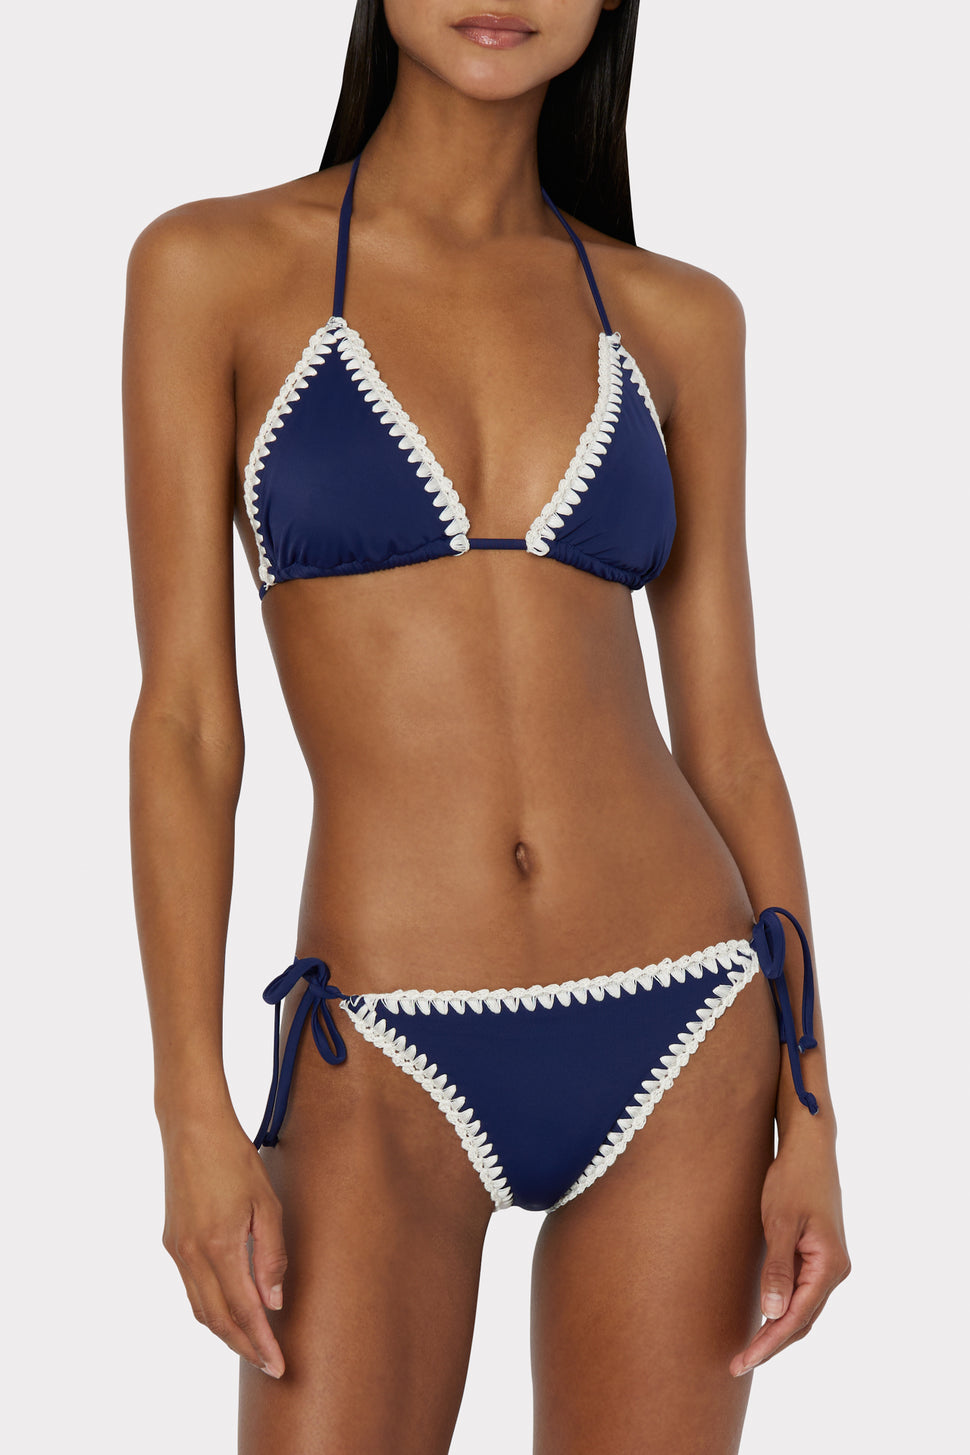 WMNS Bikini Set - Wide V Cut Top / Ruffle Trimmed Bottom / Blue